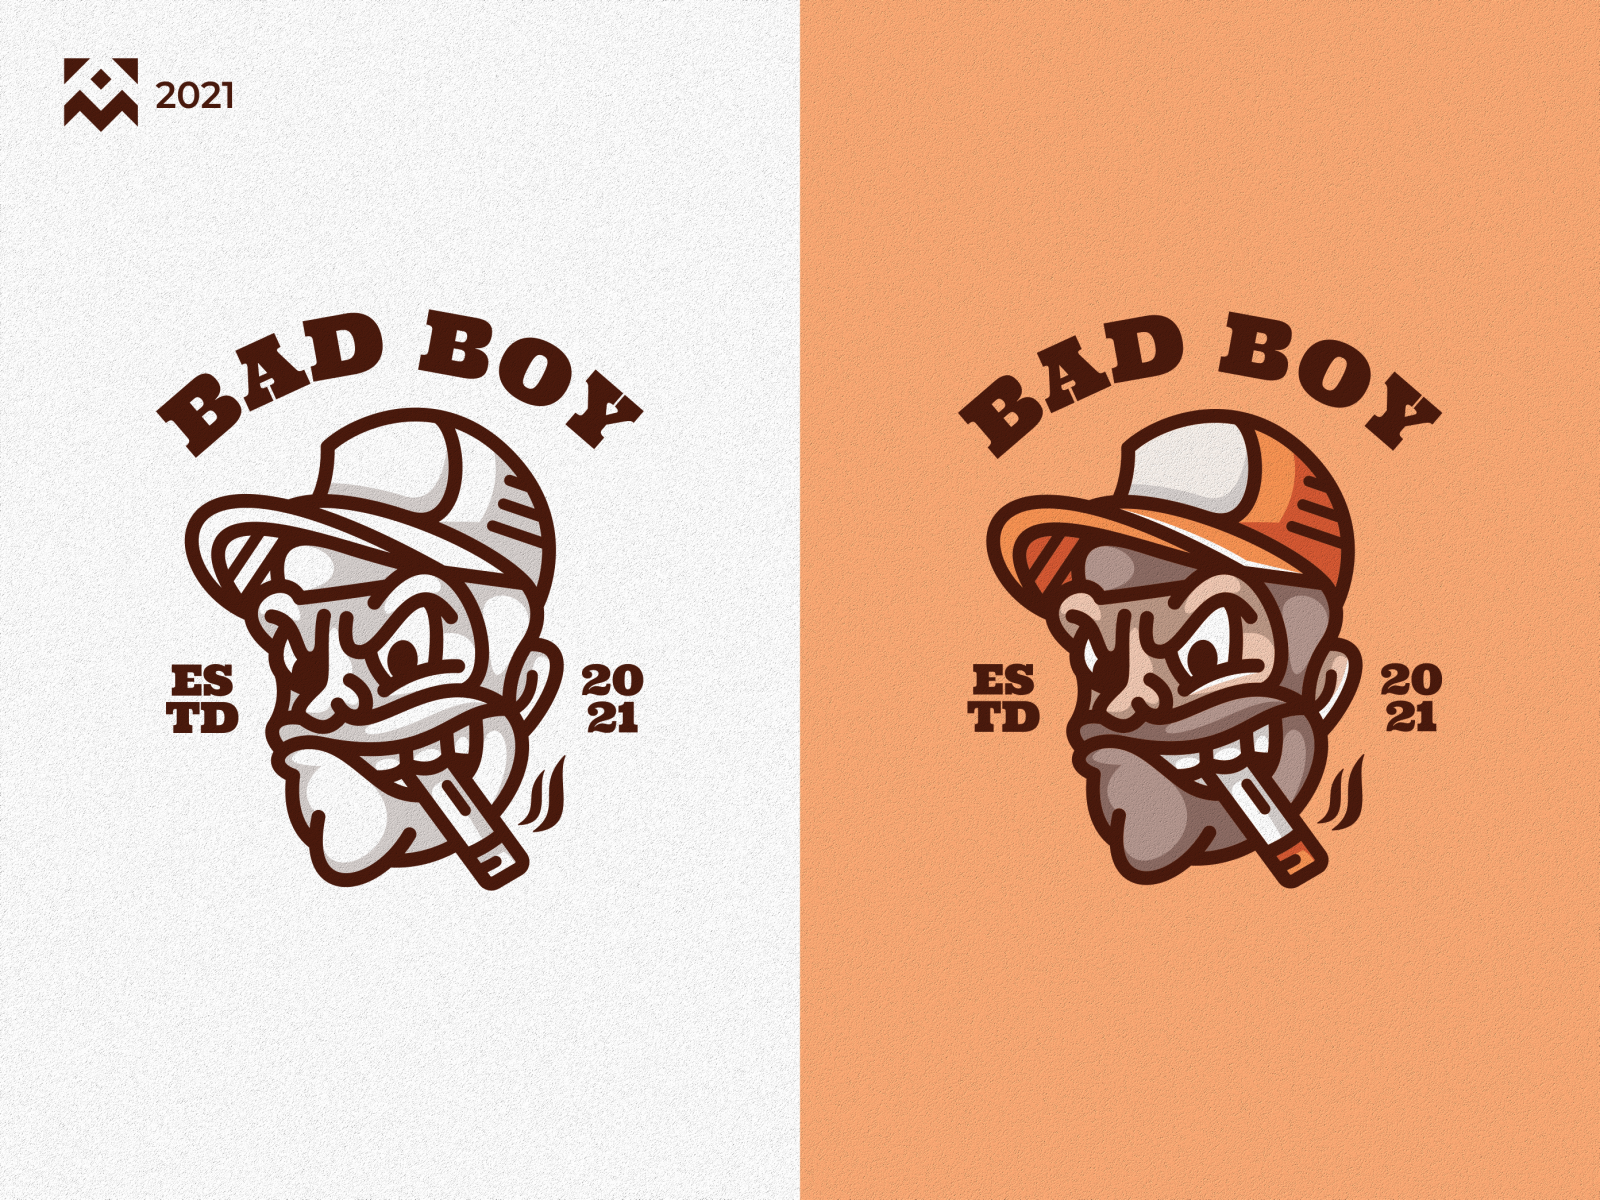 Details more than 75 logo bad boy best - ceg.edu.vn